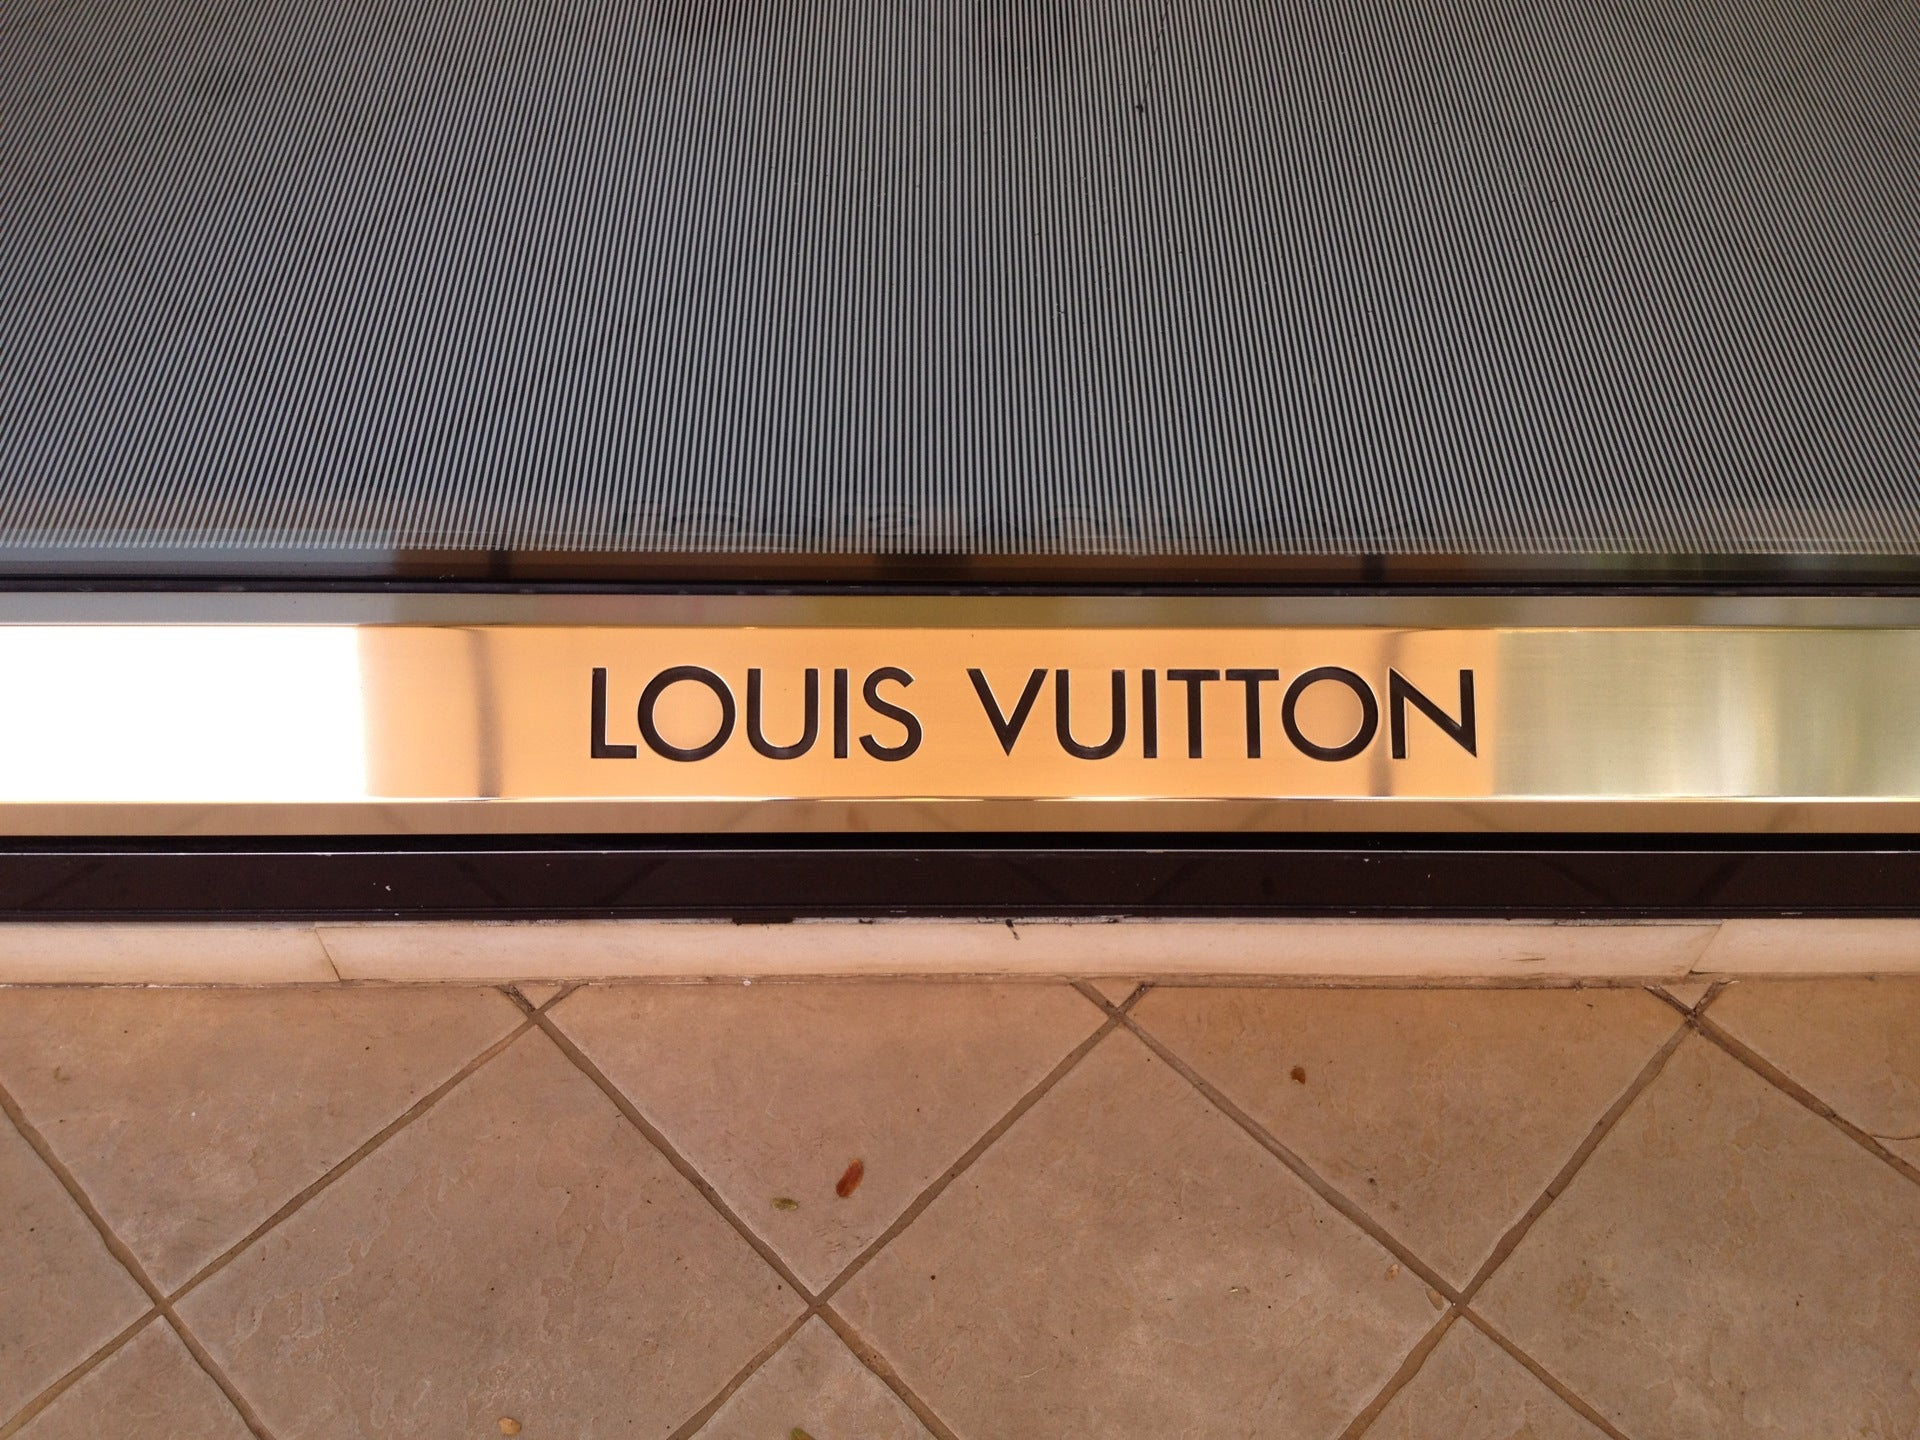 Louis Vuitton Maui Wailea store, United States